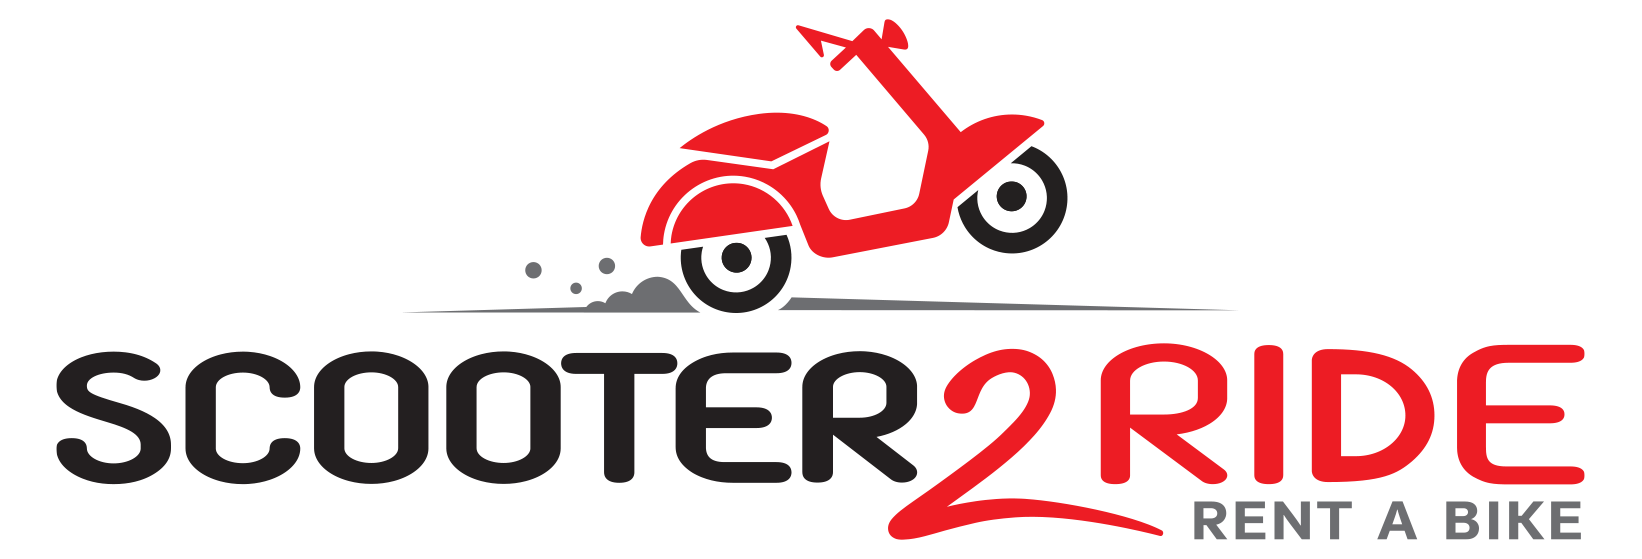 Scooter2ridenaxos